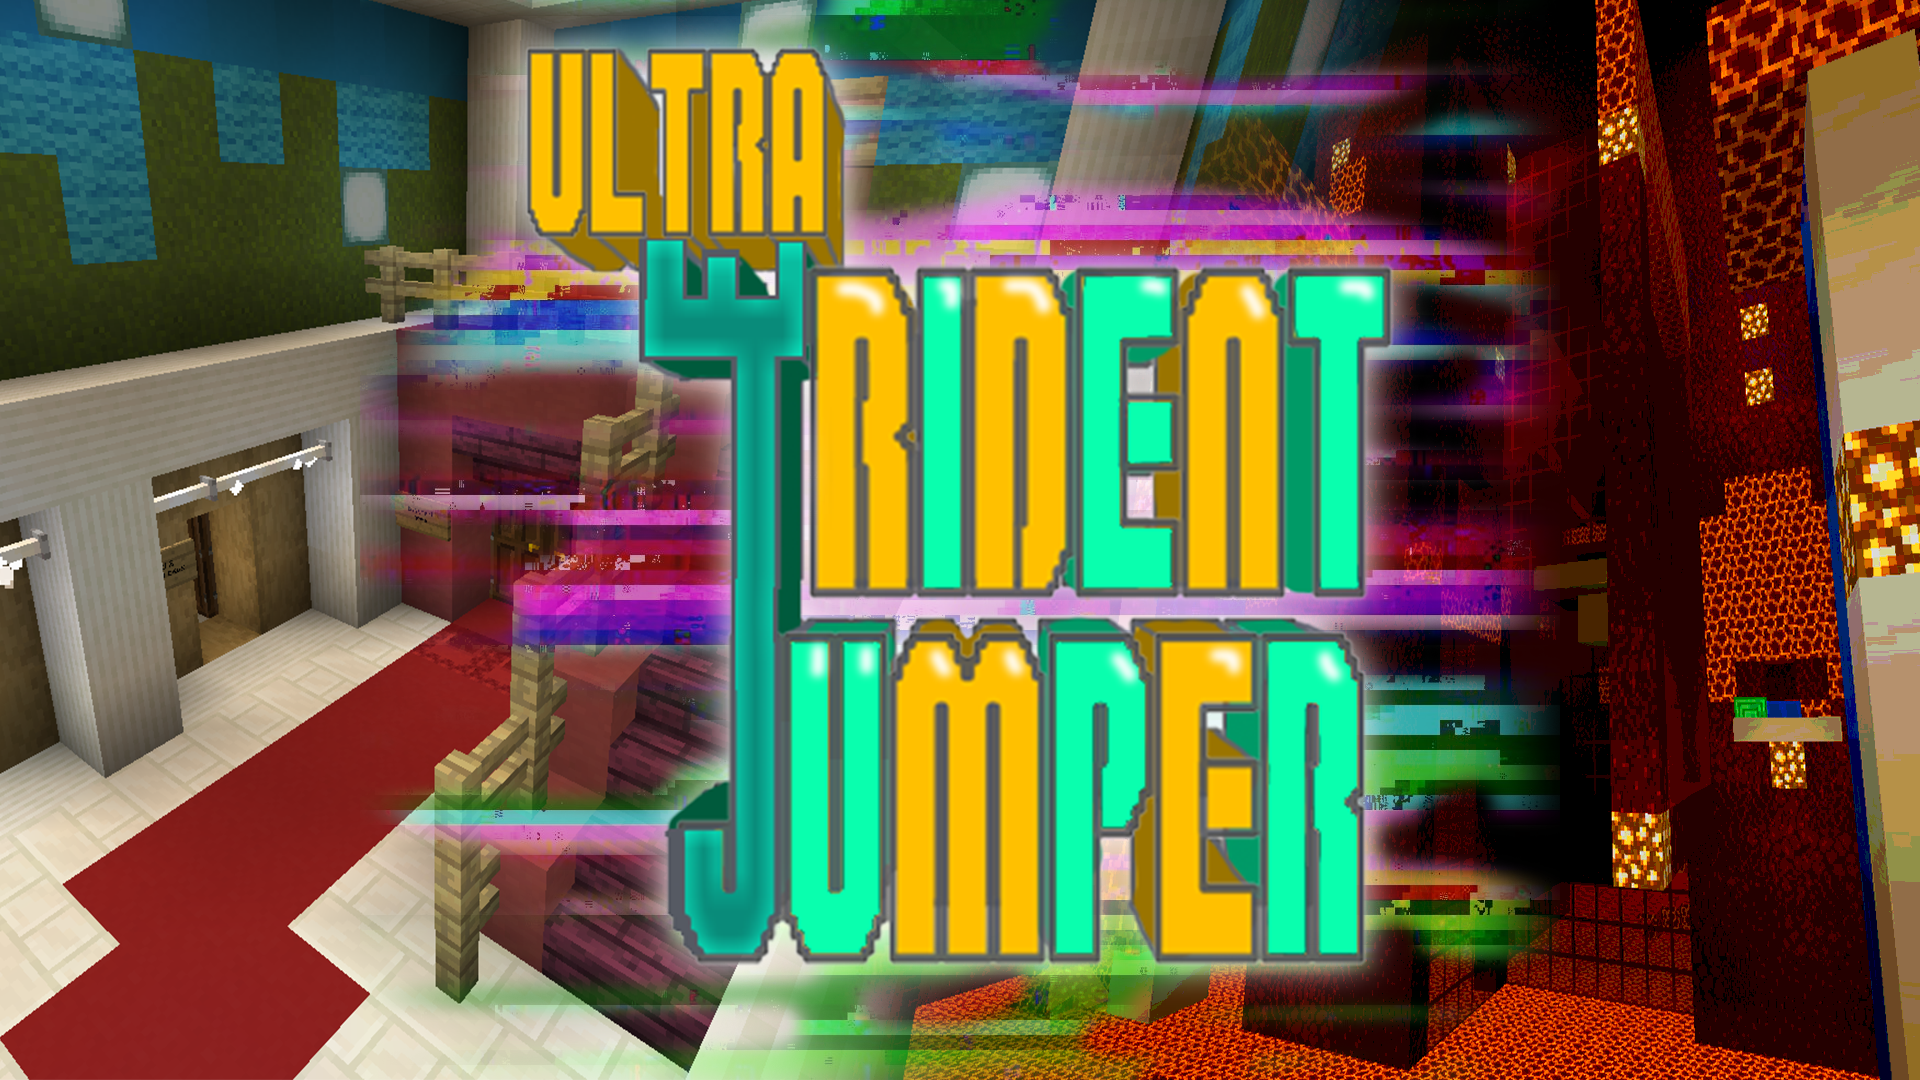 Download Ultra Trident Jumper for Minecraft 1.16.1